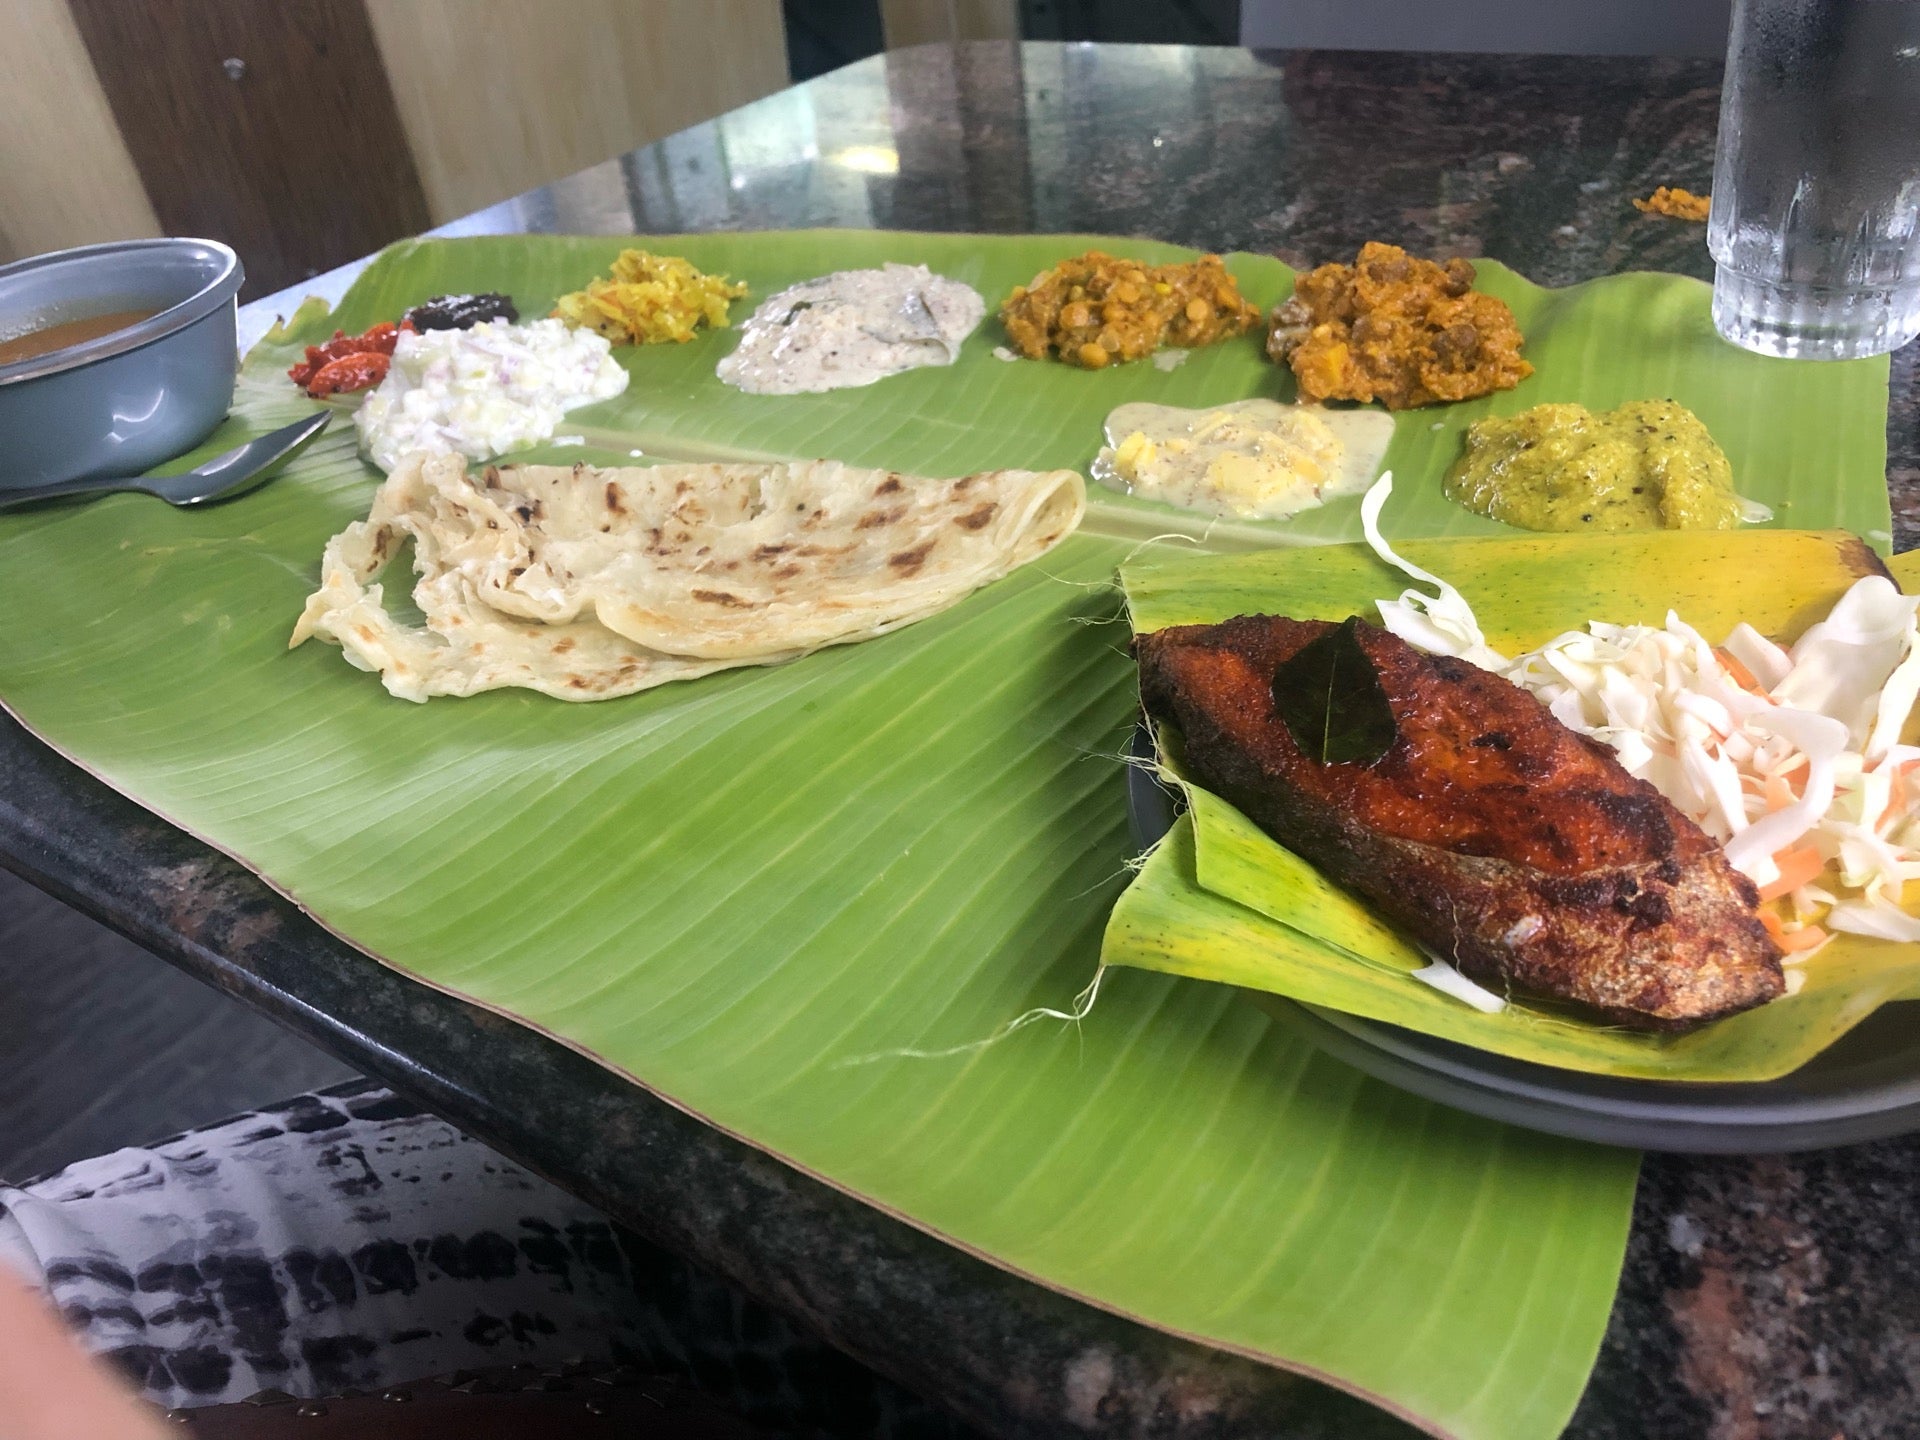 Taste of Kerala